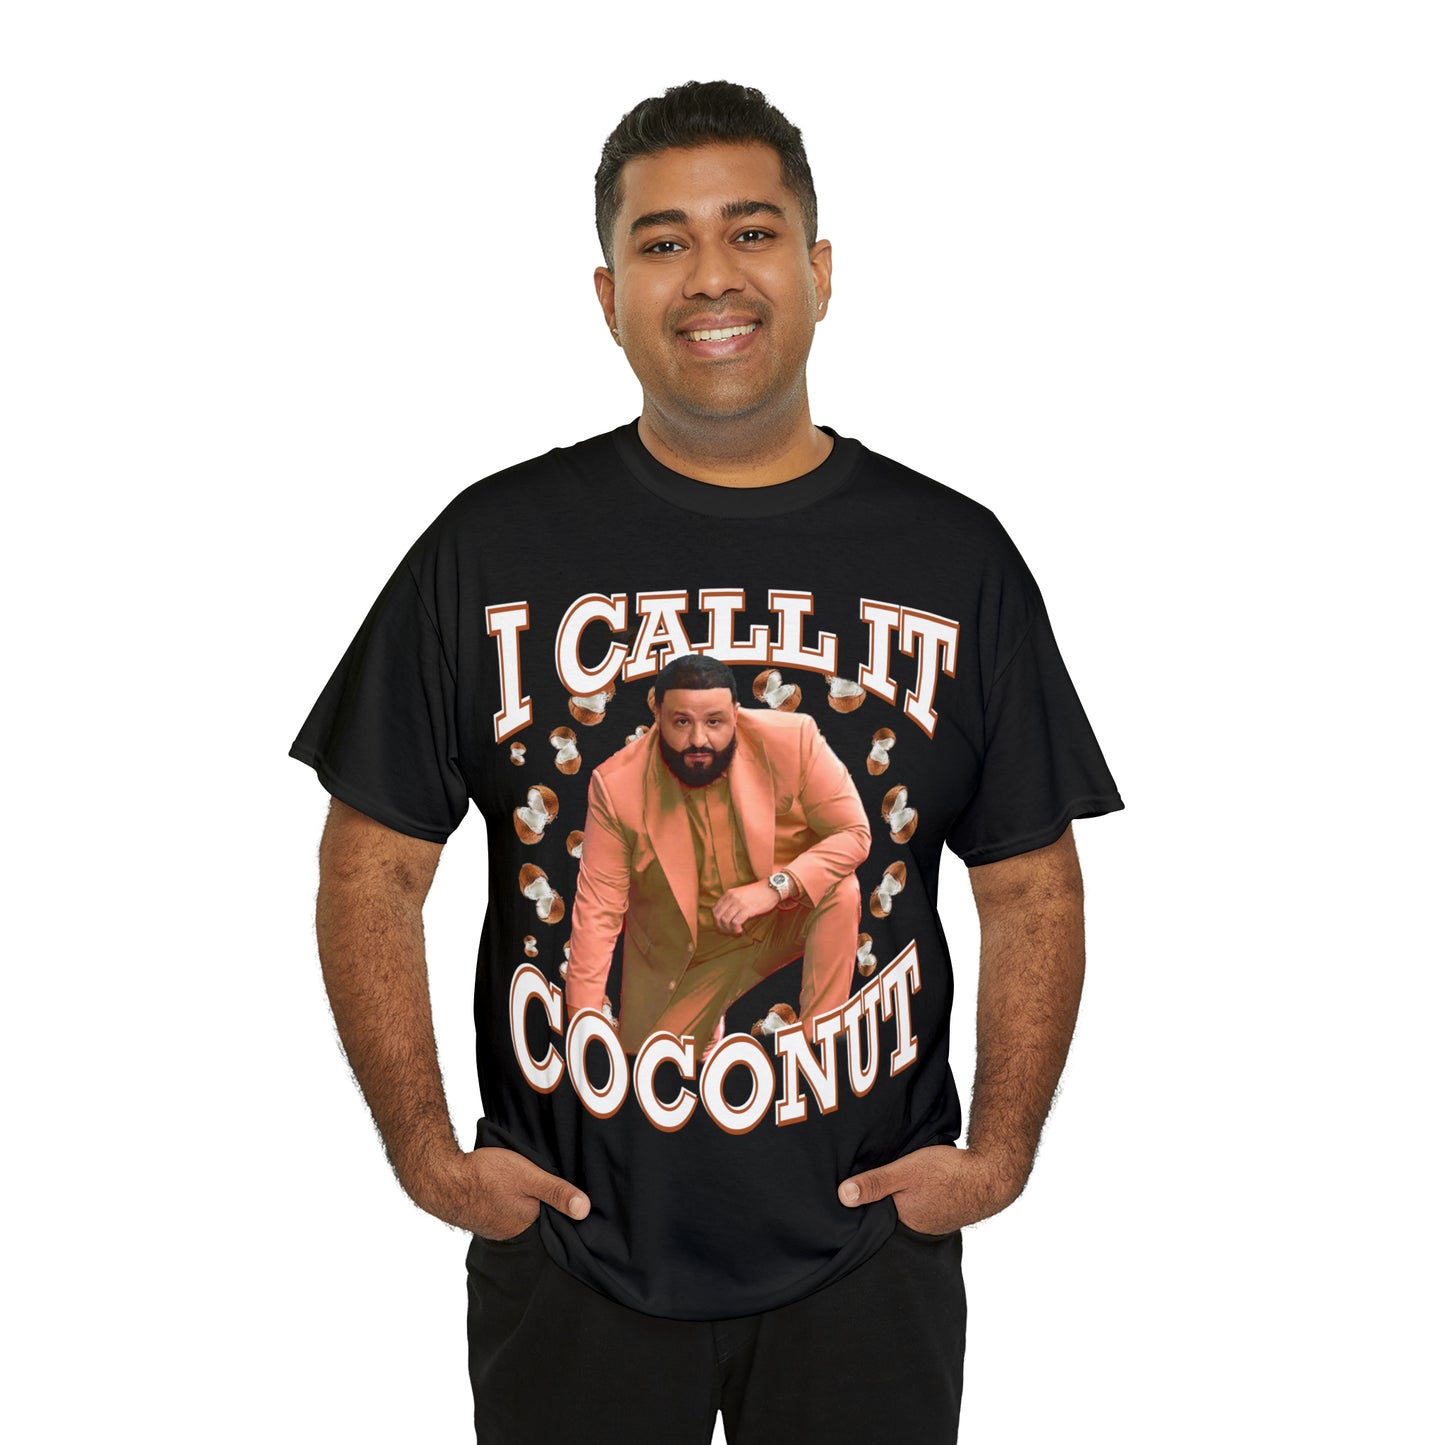 I CALL IT COCONUT